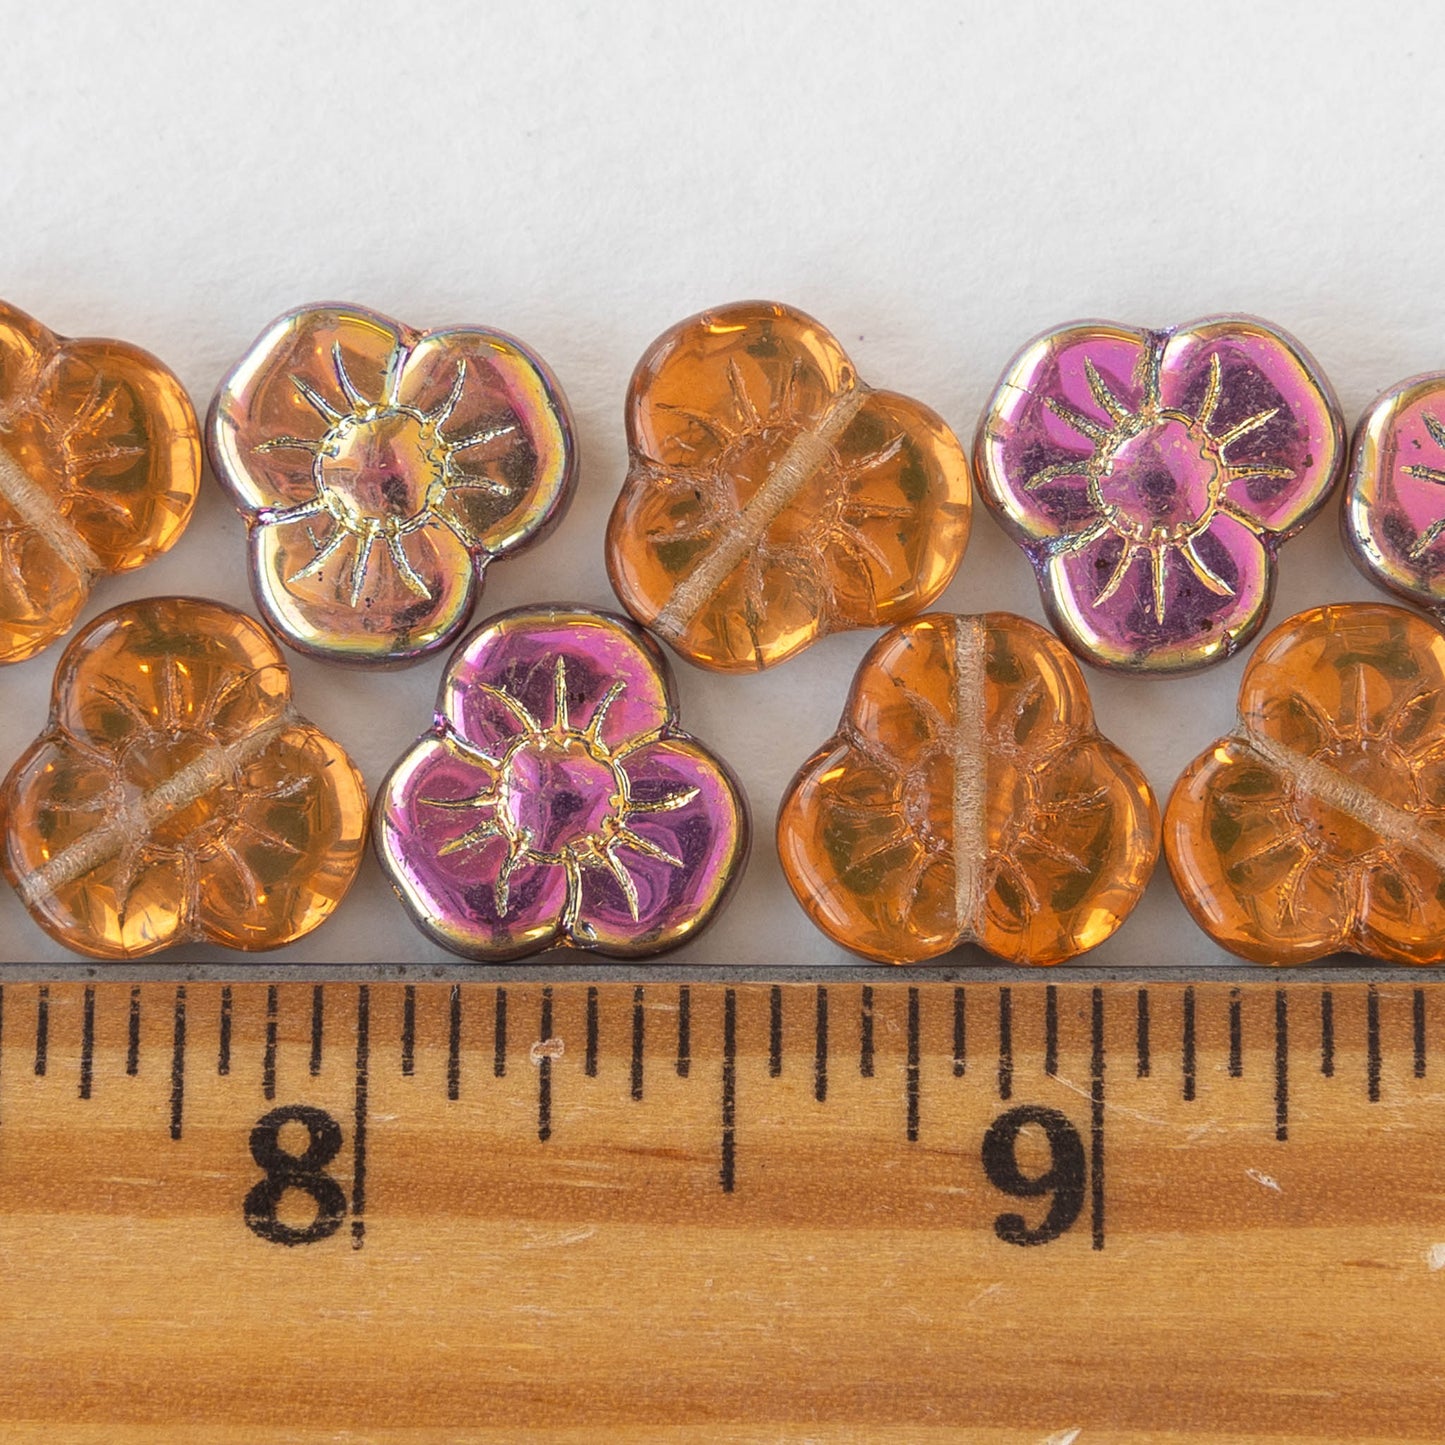 13mm Pansy Flower Beads - Iridescent Peach - 10 Beads